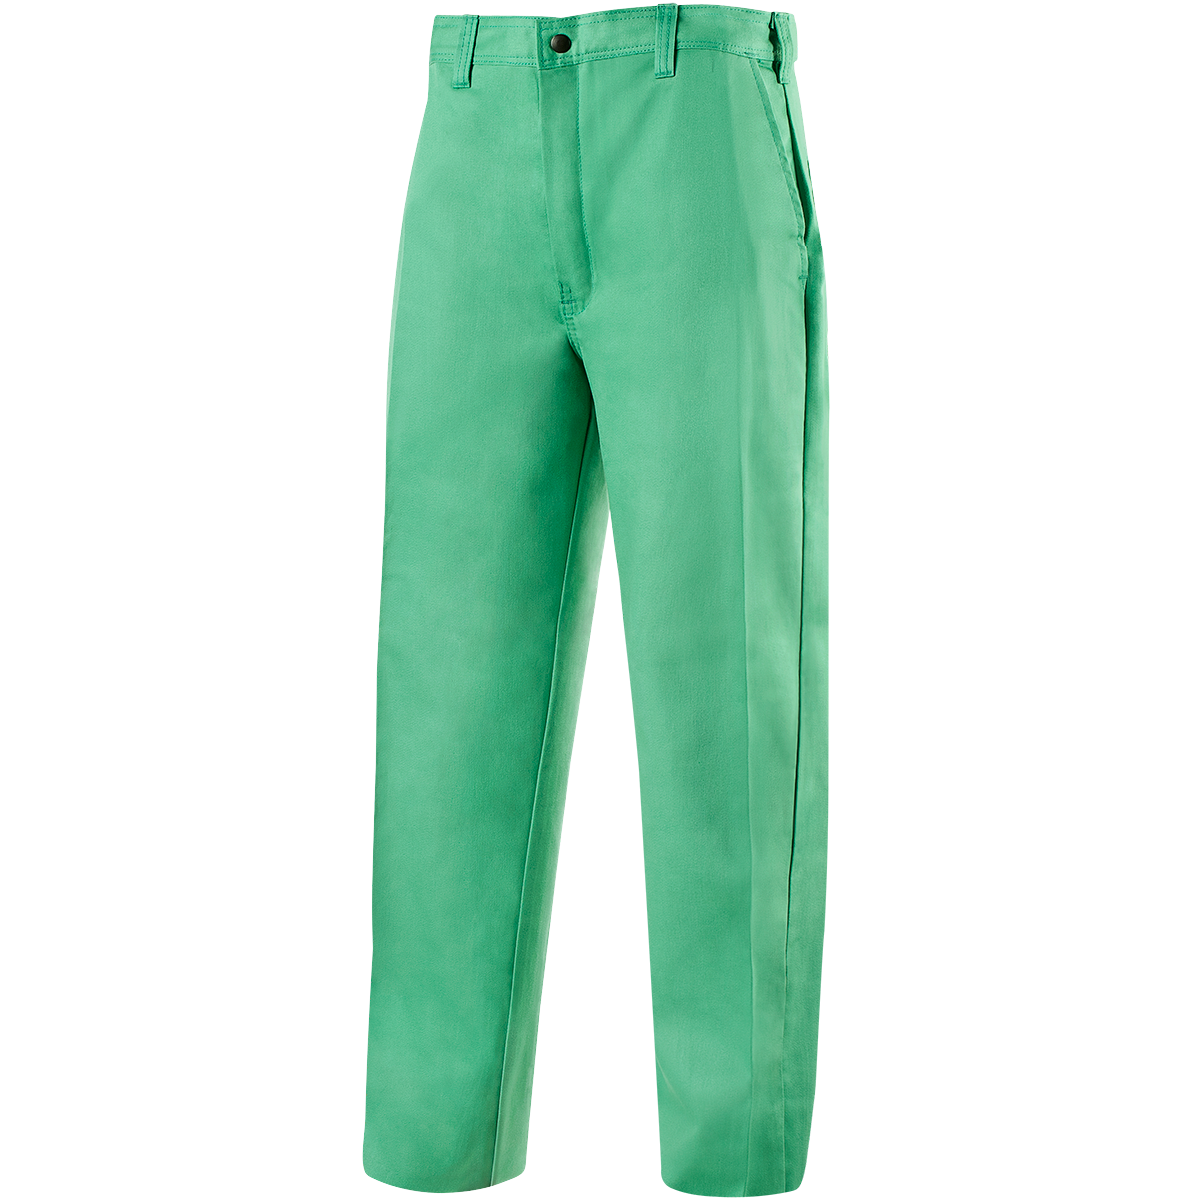 Pants, Weldlite, 9 oz. Green, FR, various sizes